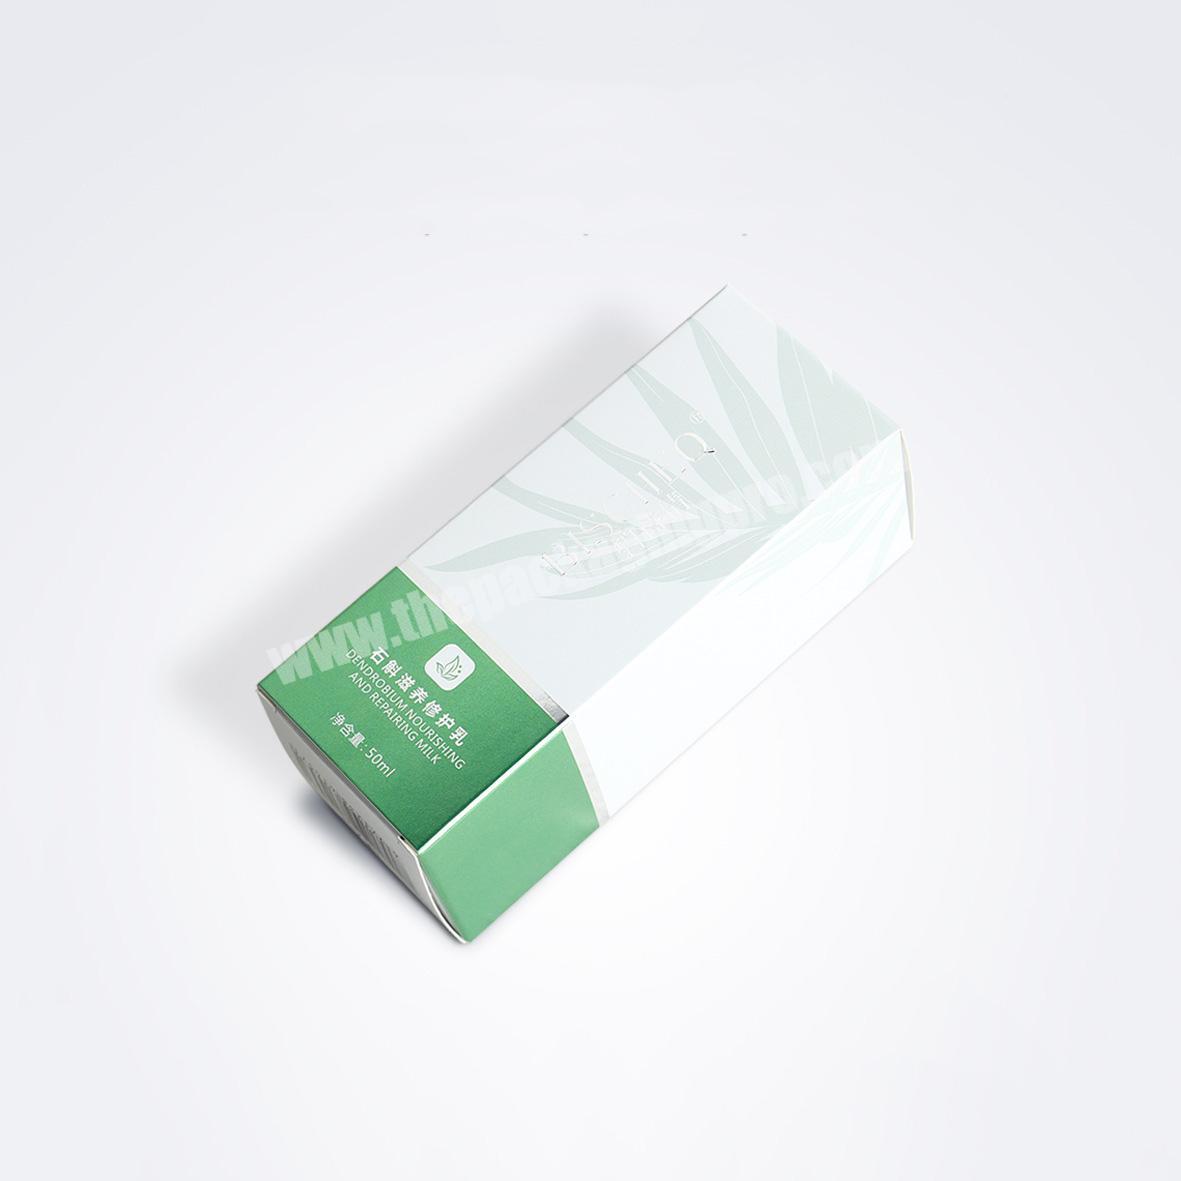 Factory direct lipgloss box packaging lipstick box packaging small box packaging with high quality